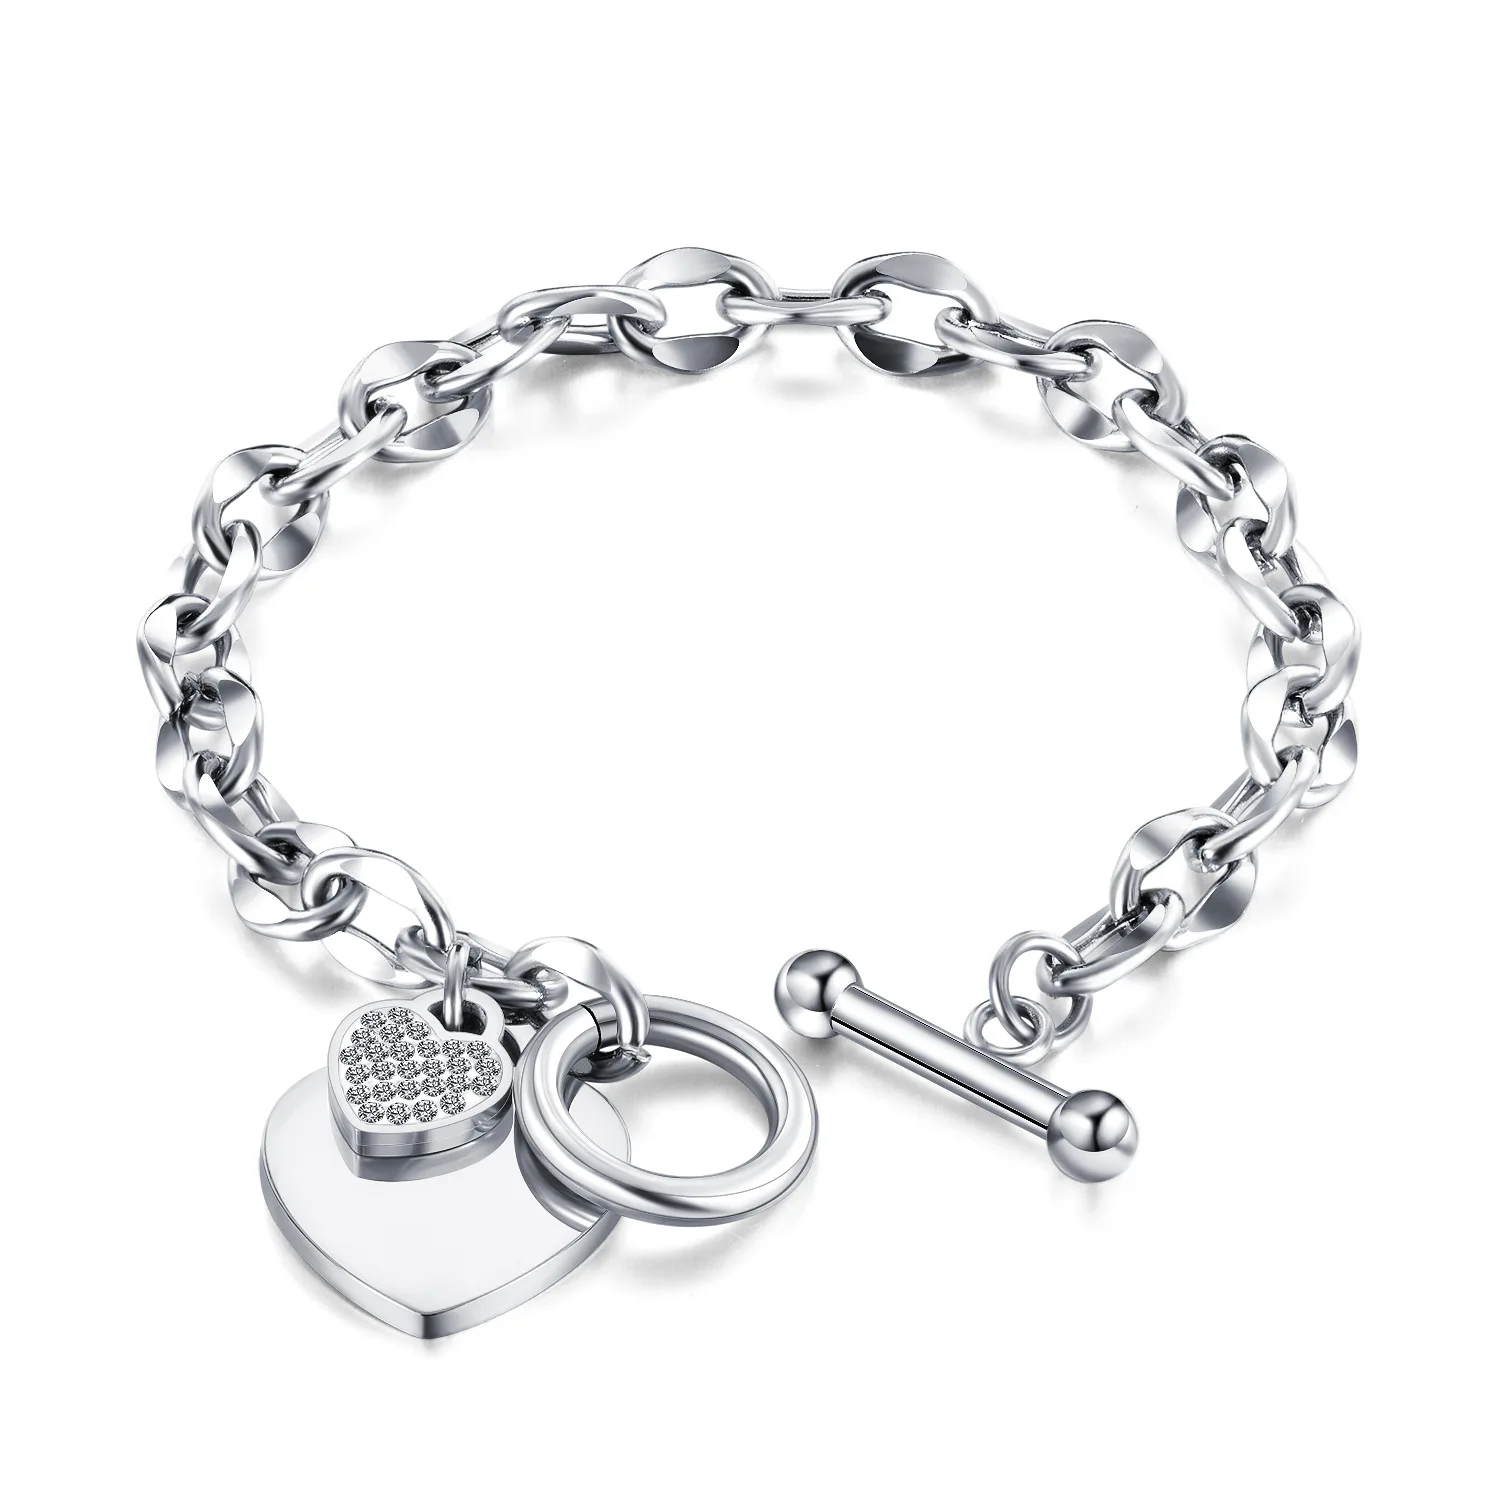 Platinum plated heart charm bracelet